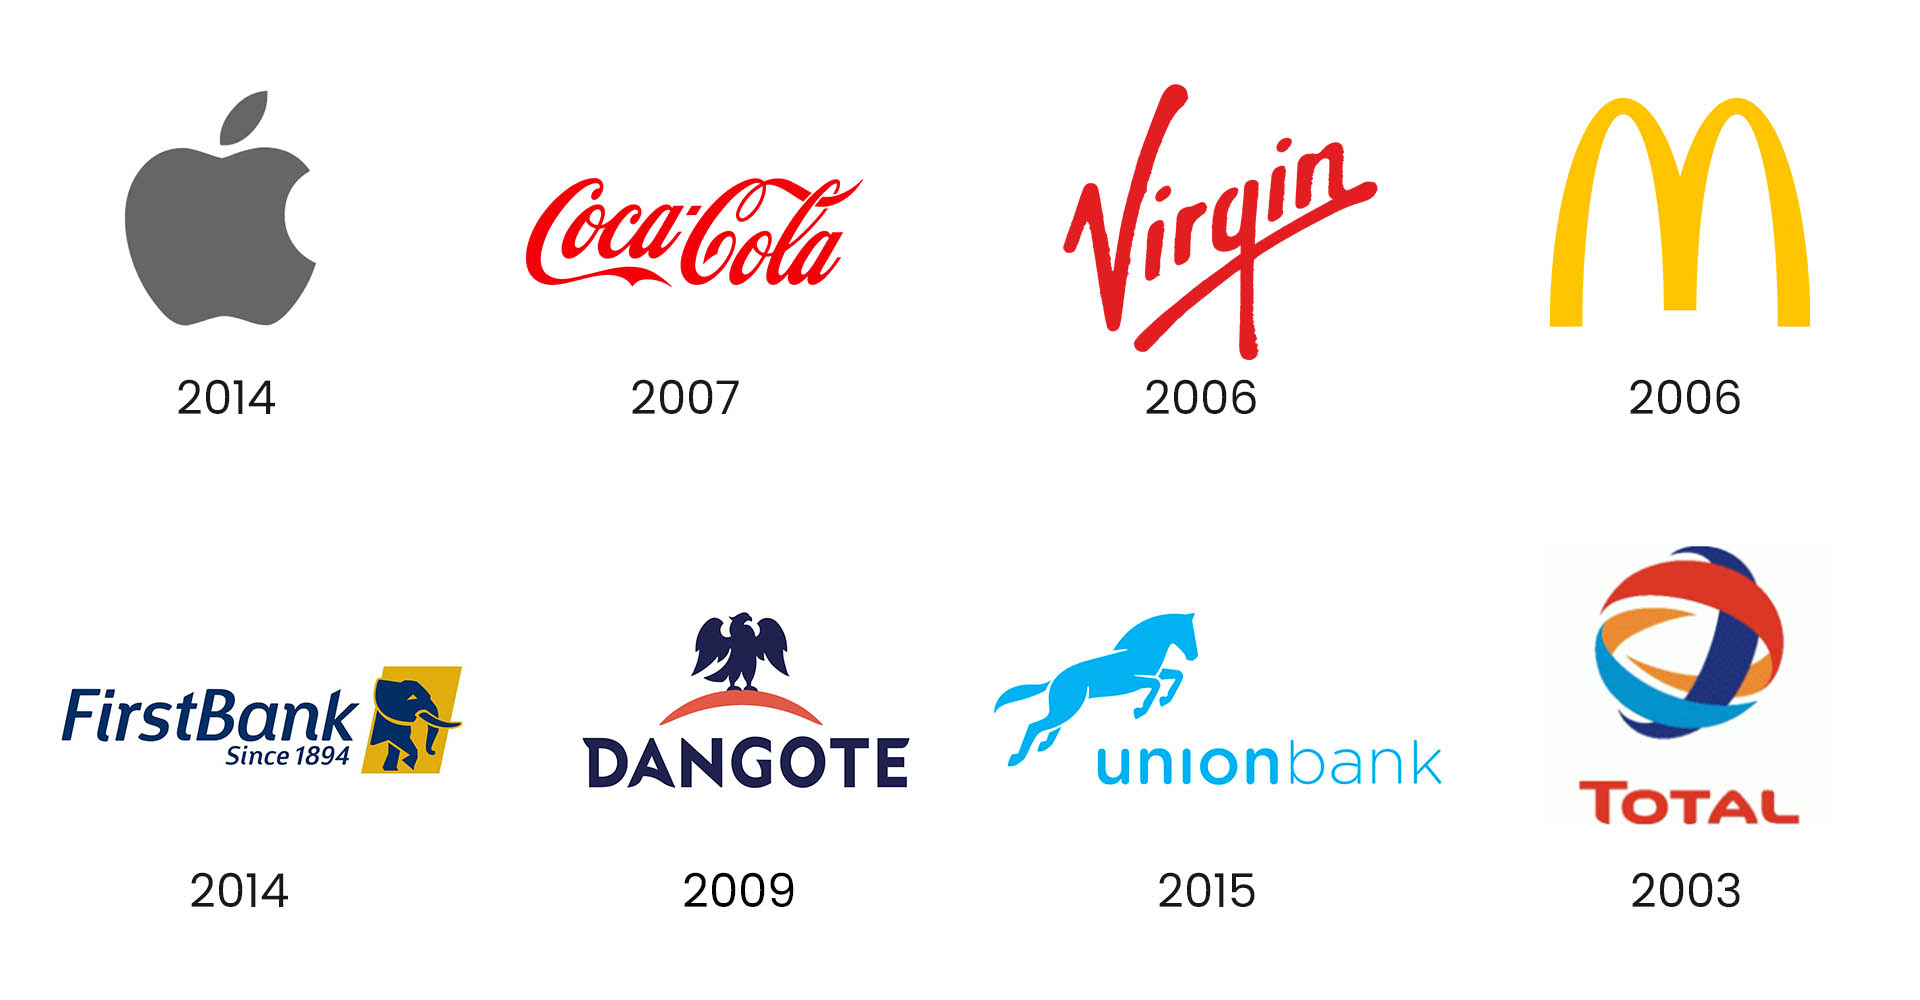 Same brands, different era